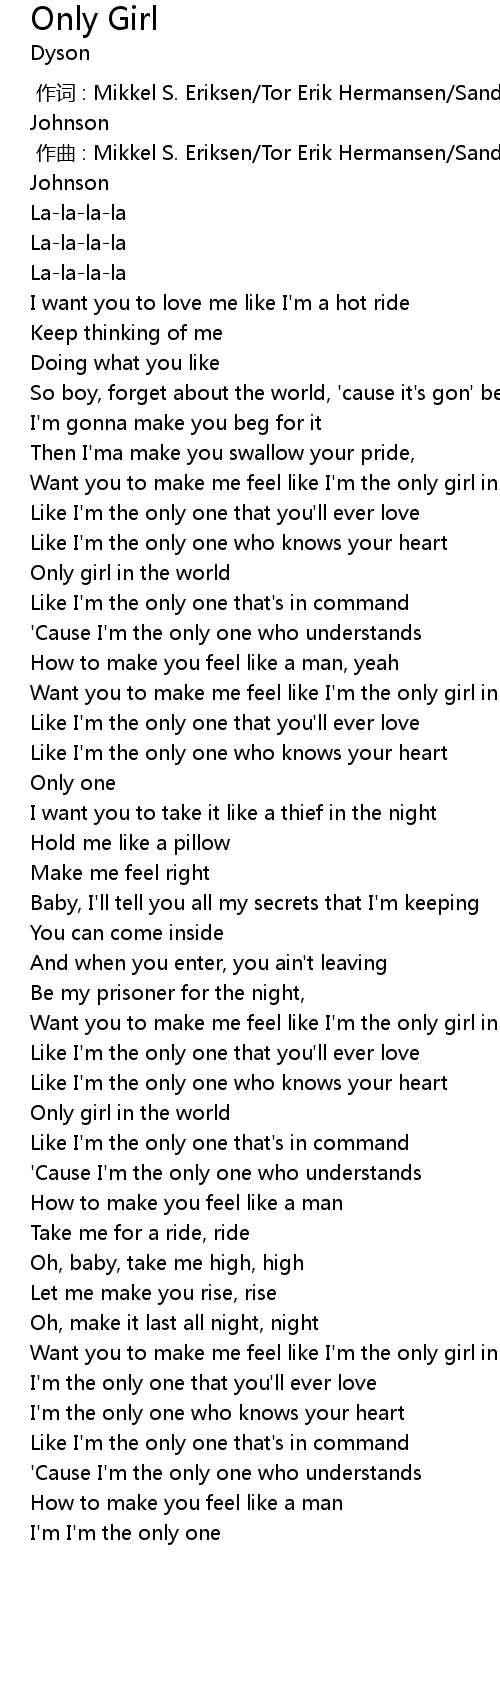 Only Girl Lyrics